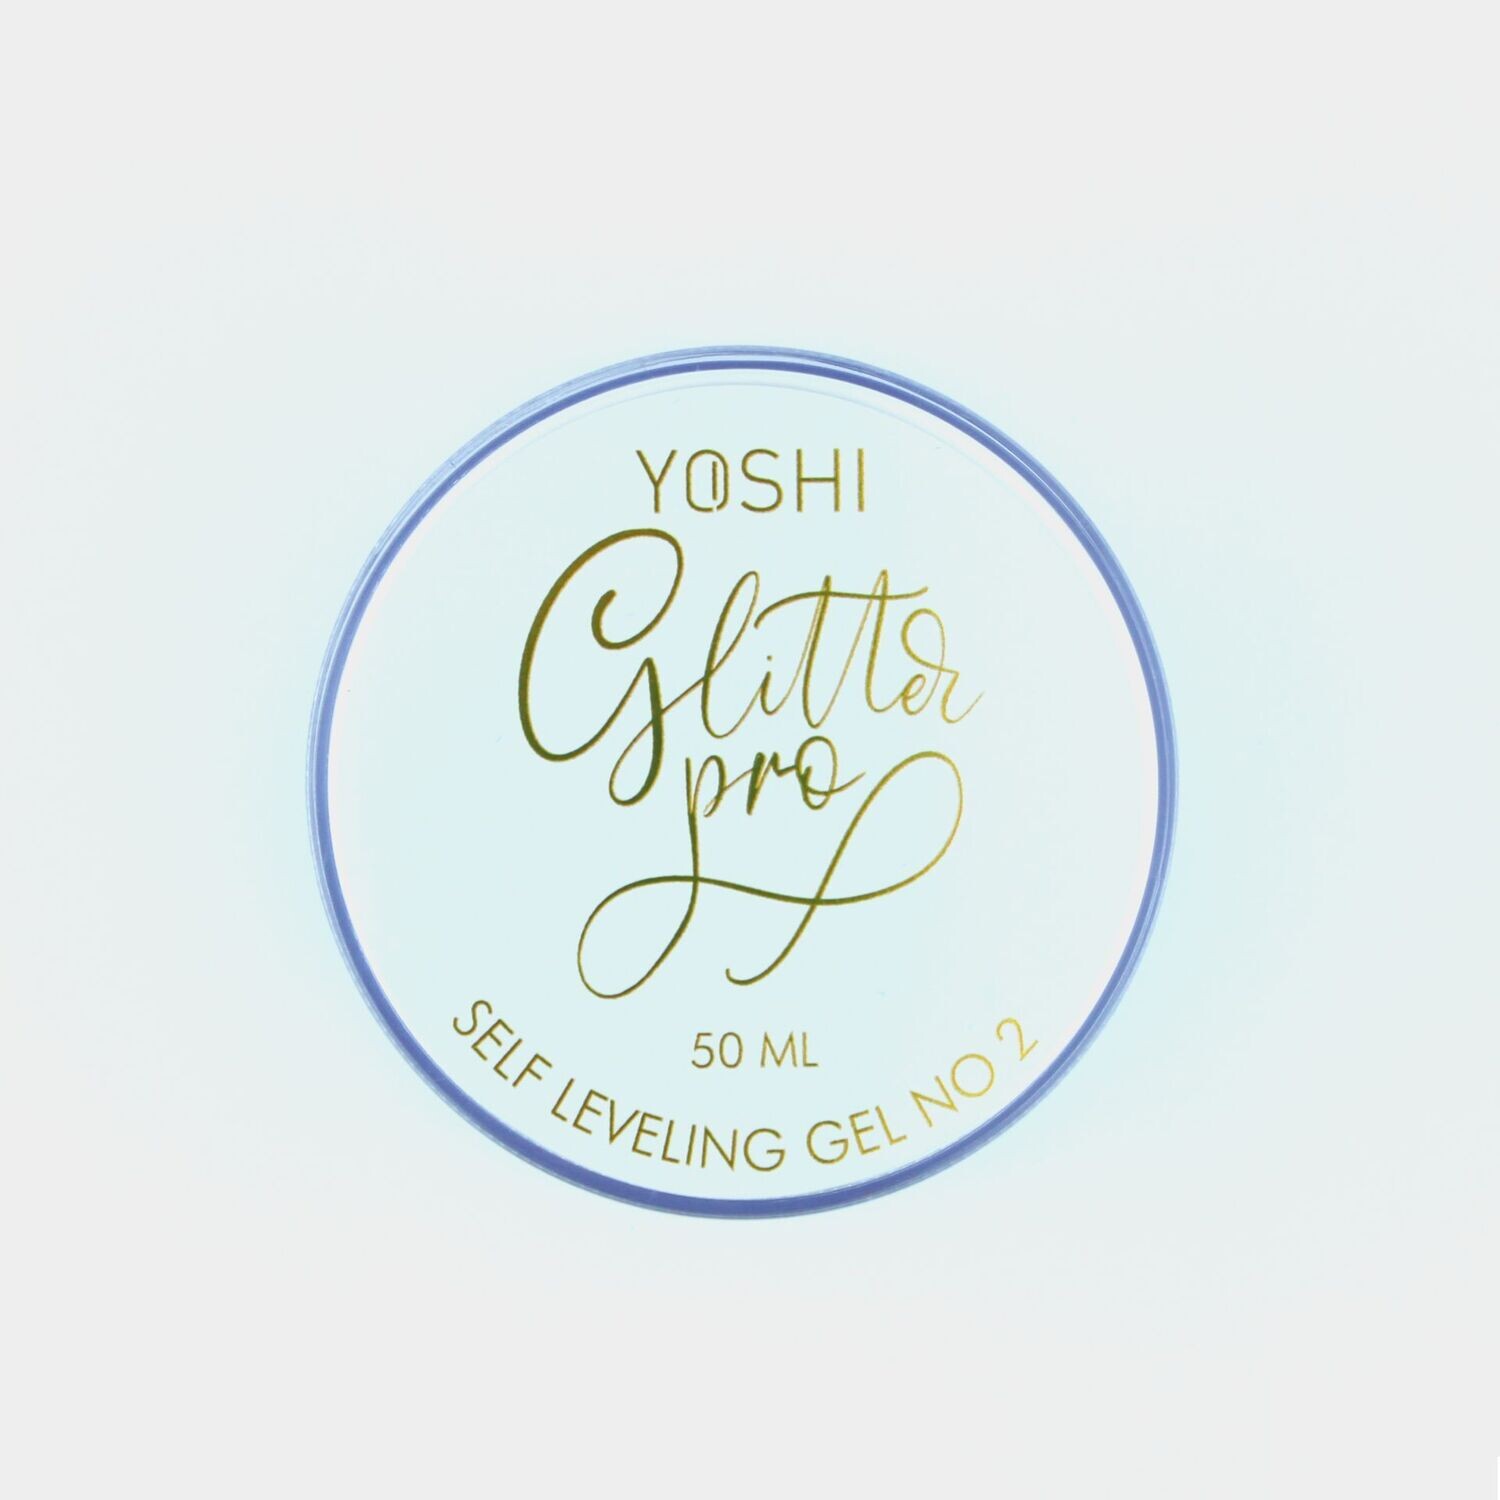 Yoshi Glitter Pro Uv Gel Self Leveling No2 50 ml